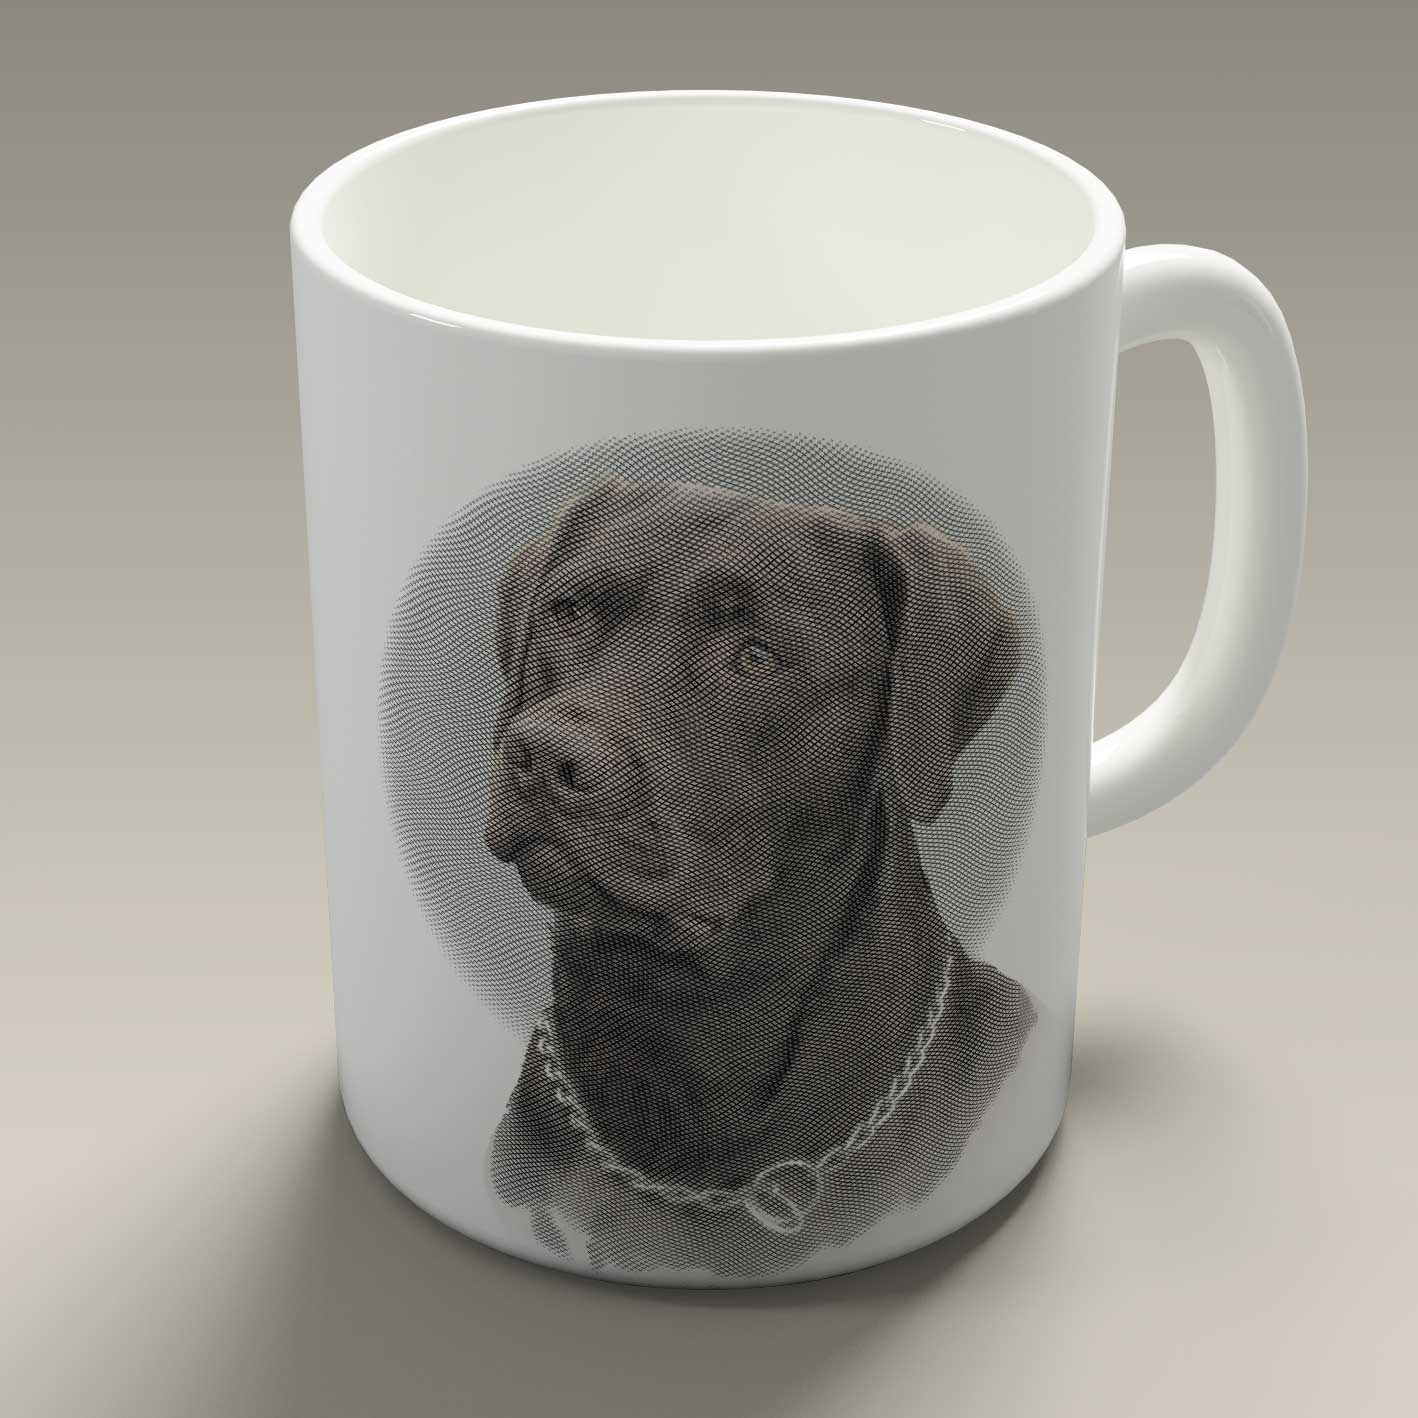 custom mugs - natural - includes your pet photo design